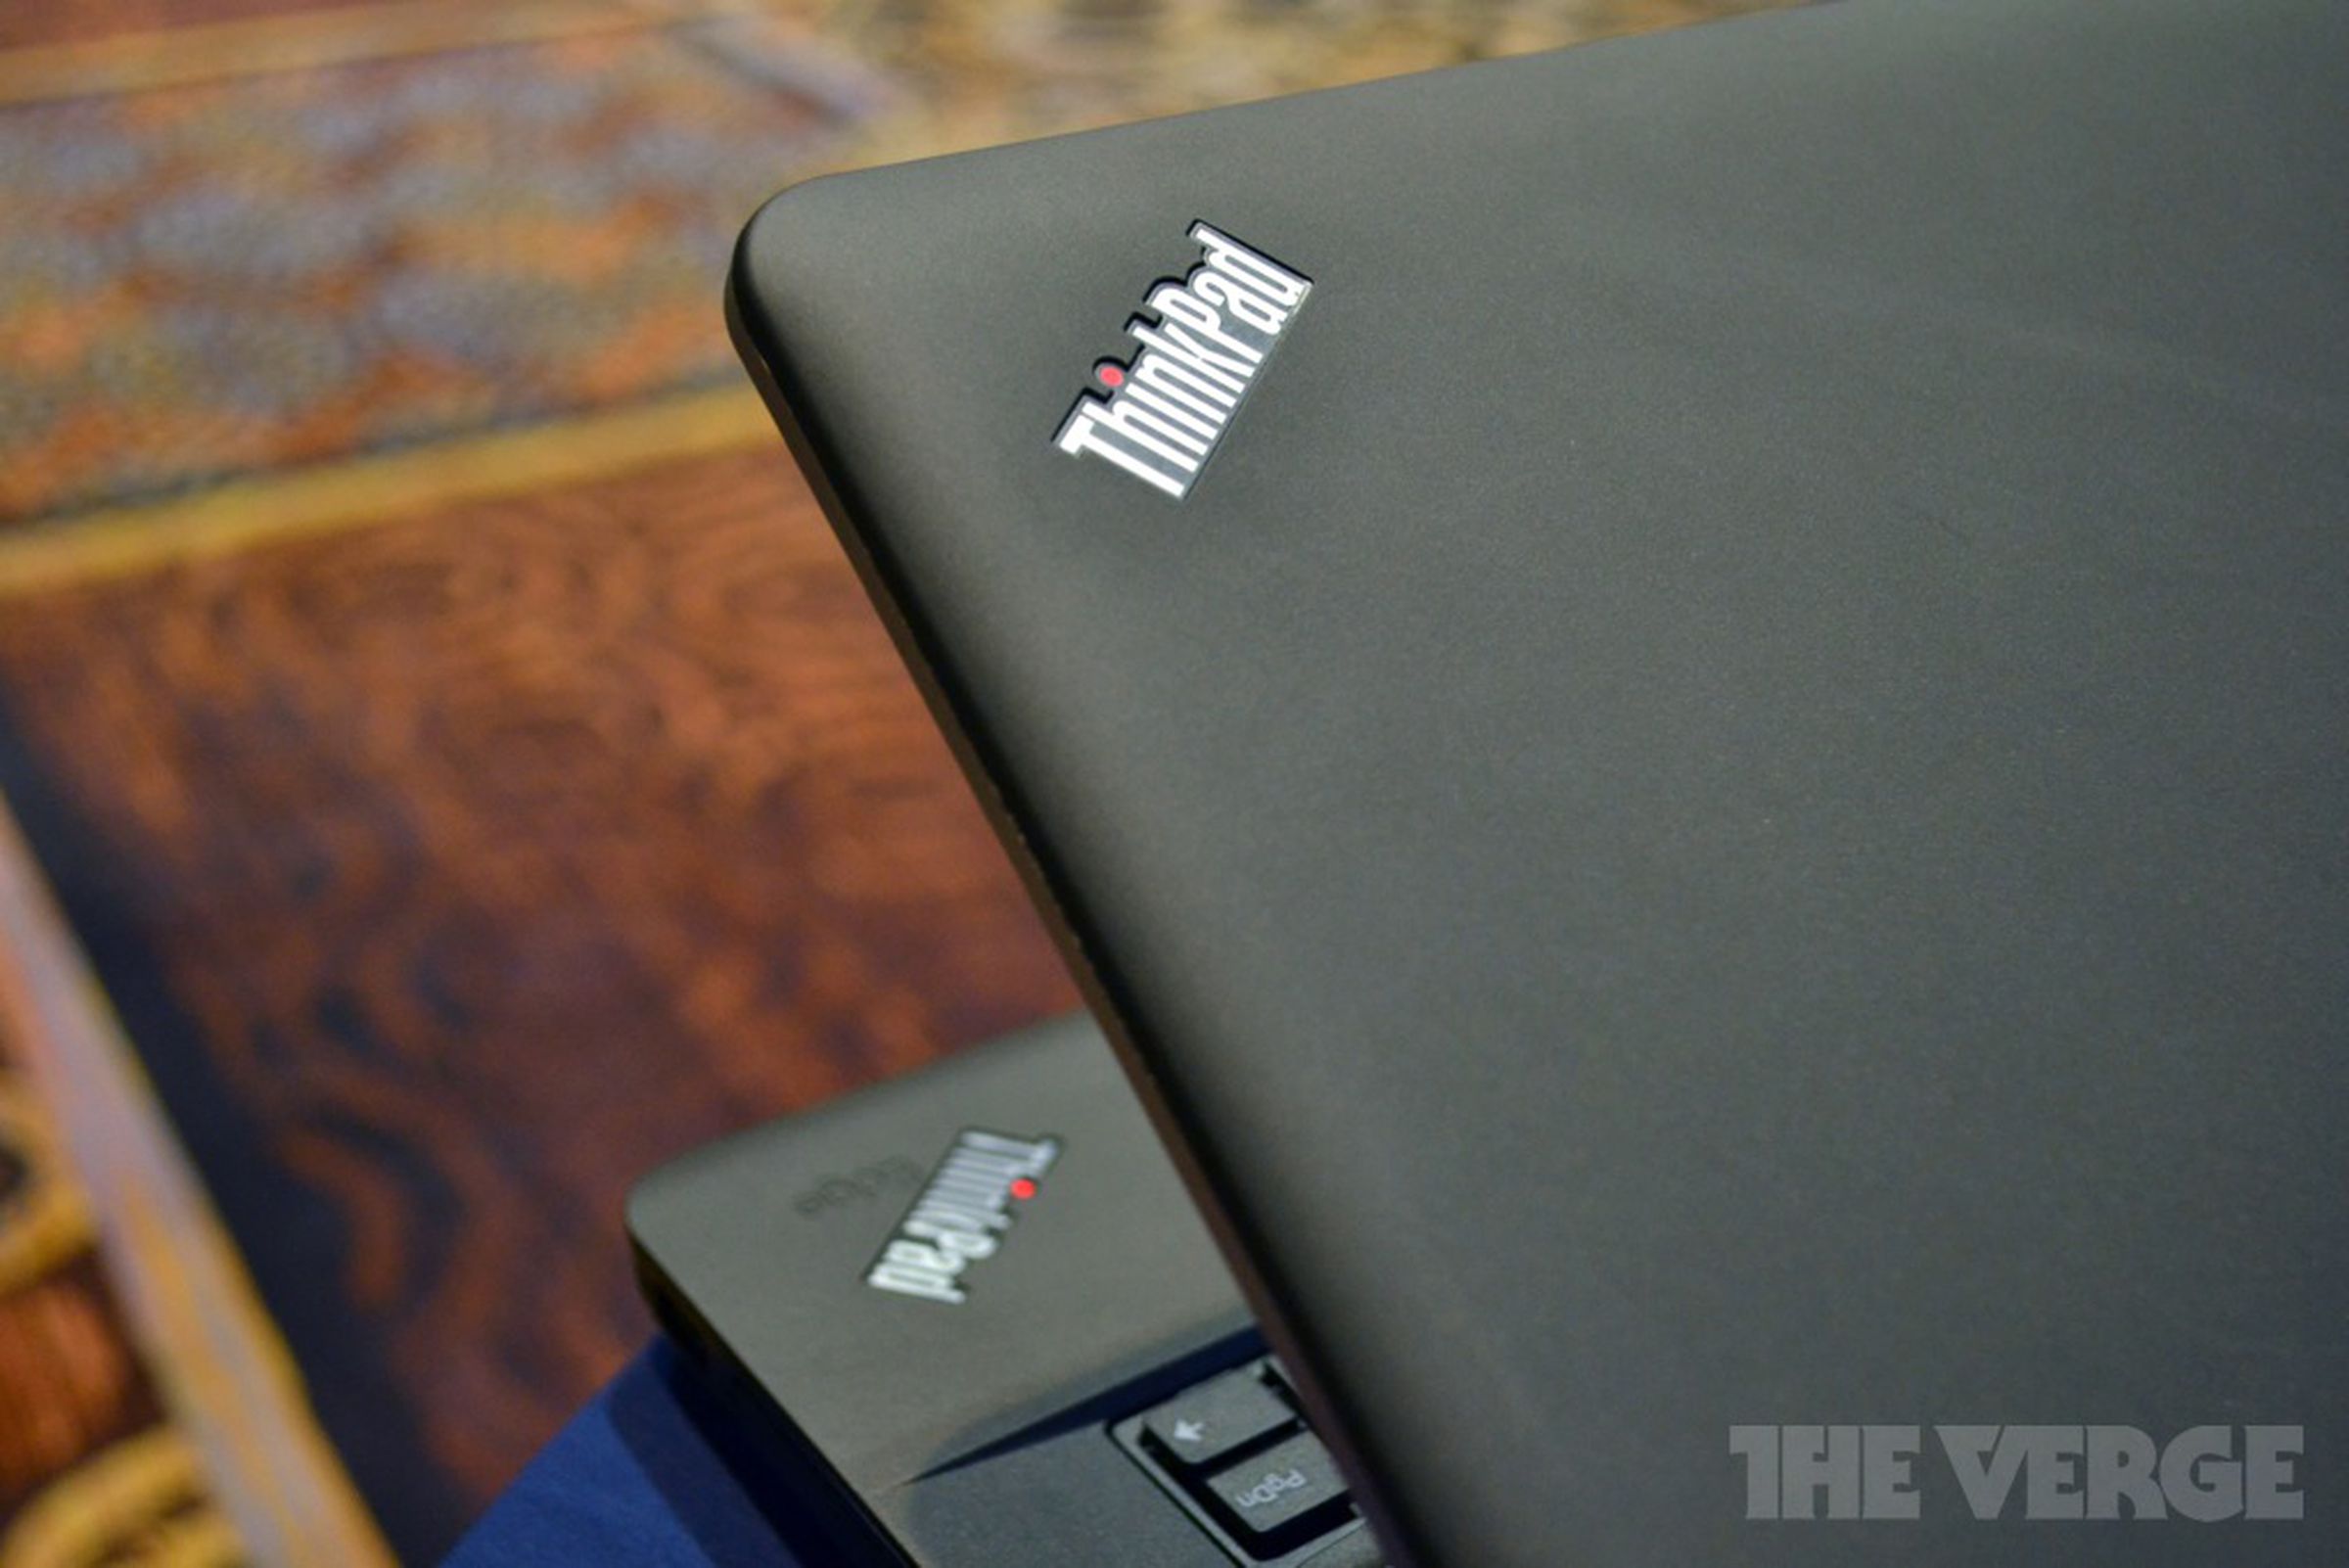 Lenovo ThinkPad Edge E431 hands-on